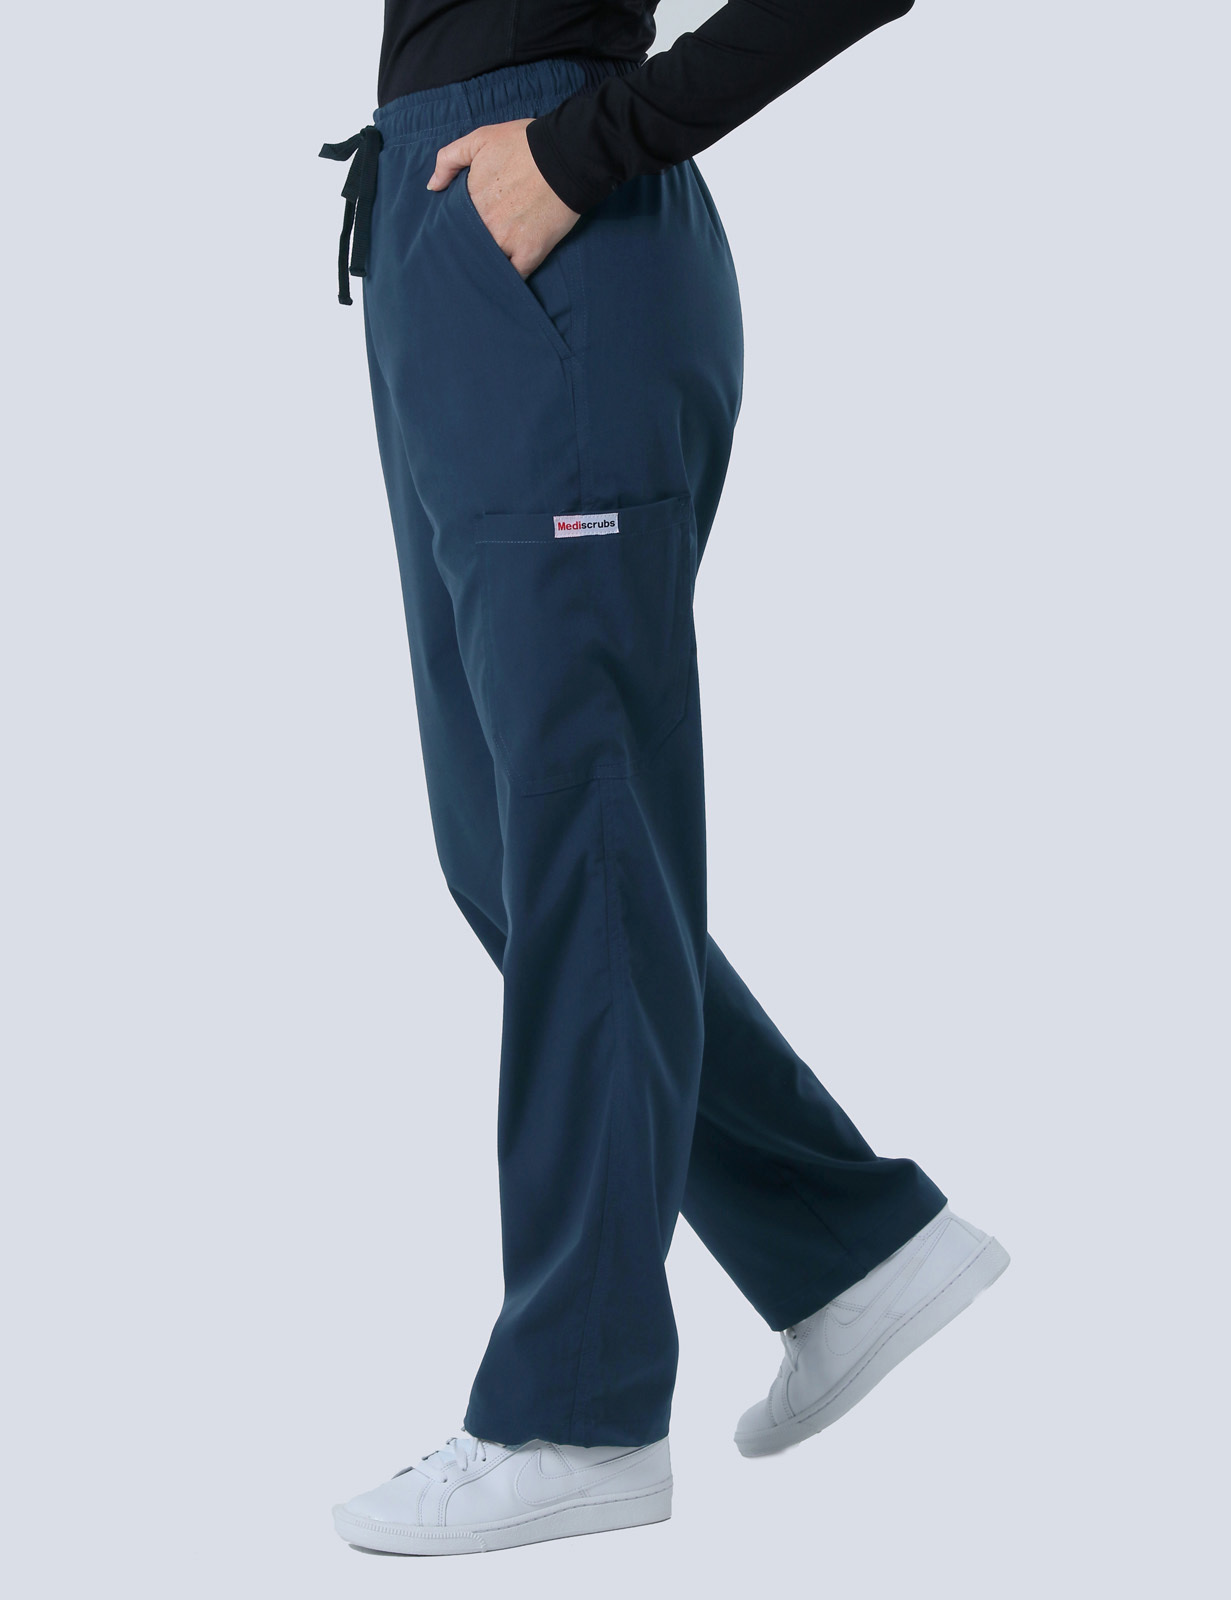 Moranbah Hospital - Nursing (Women's Fit Solid Scrub Top and Cargo Pants in Navy incl Logos)